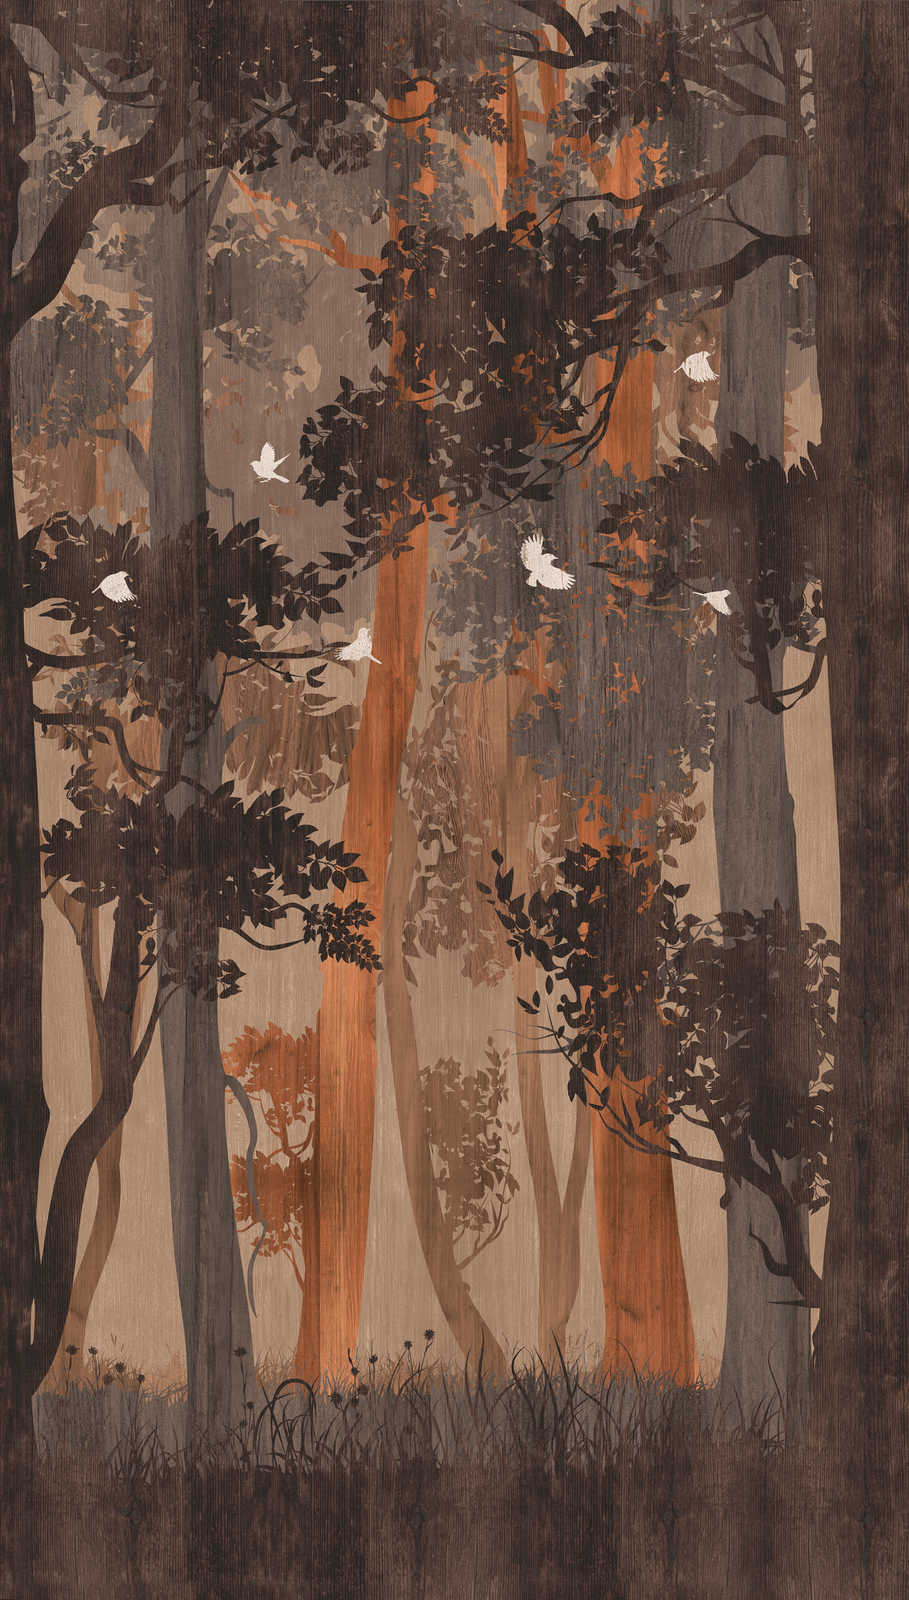             Non-woven wallpaper forest motif in autumn colours with birds - blue, beige, orange
        